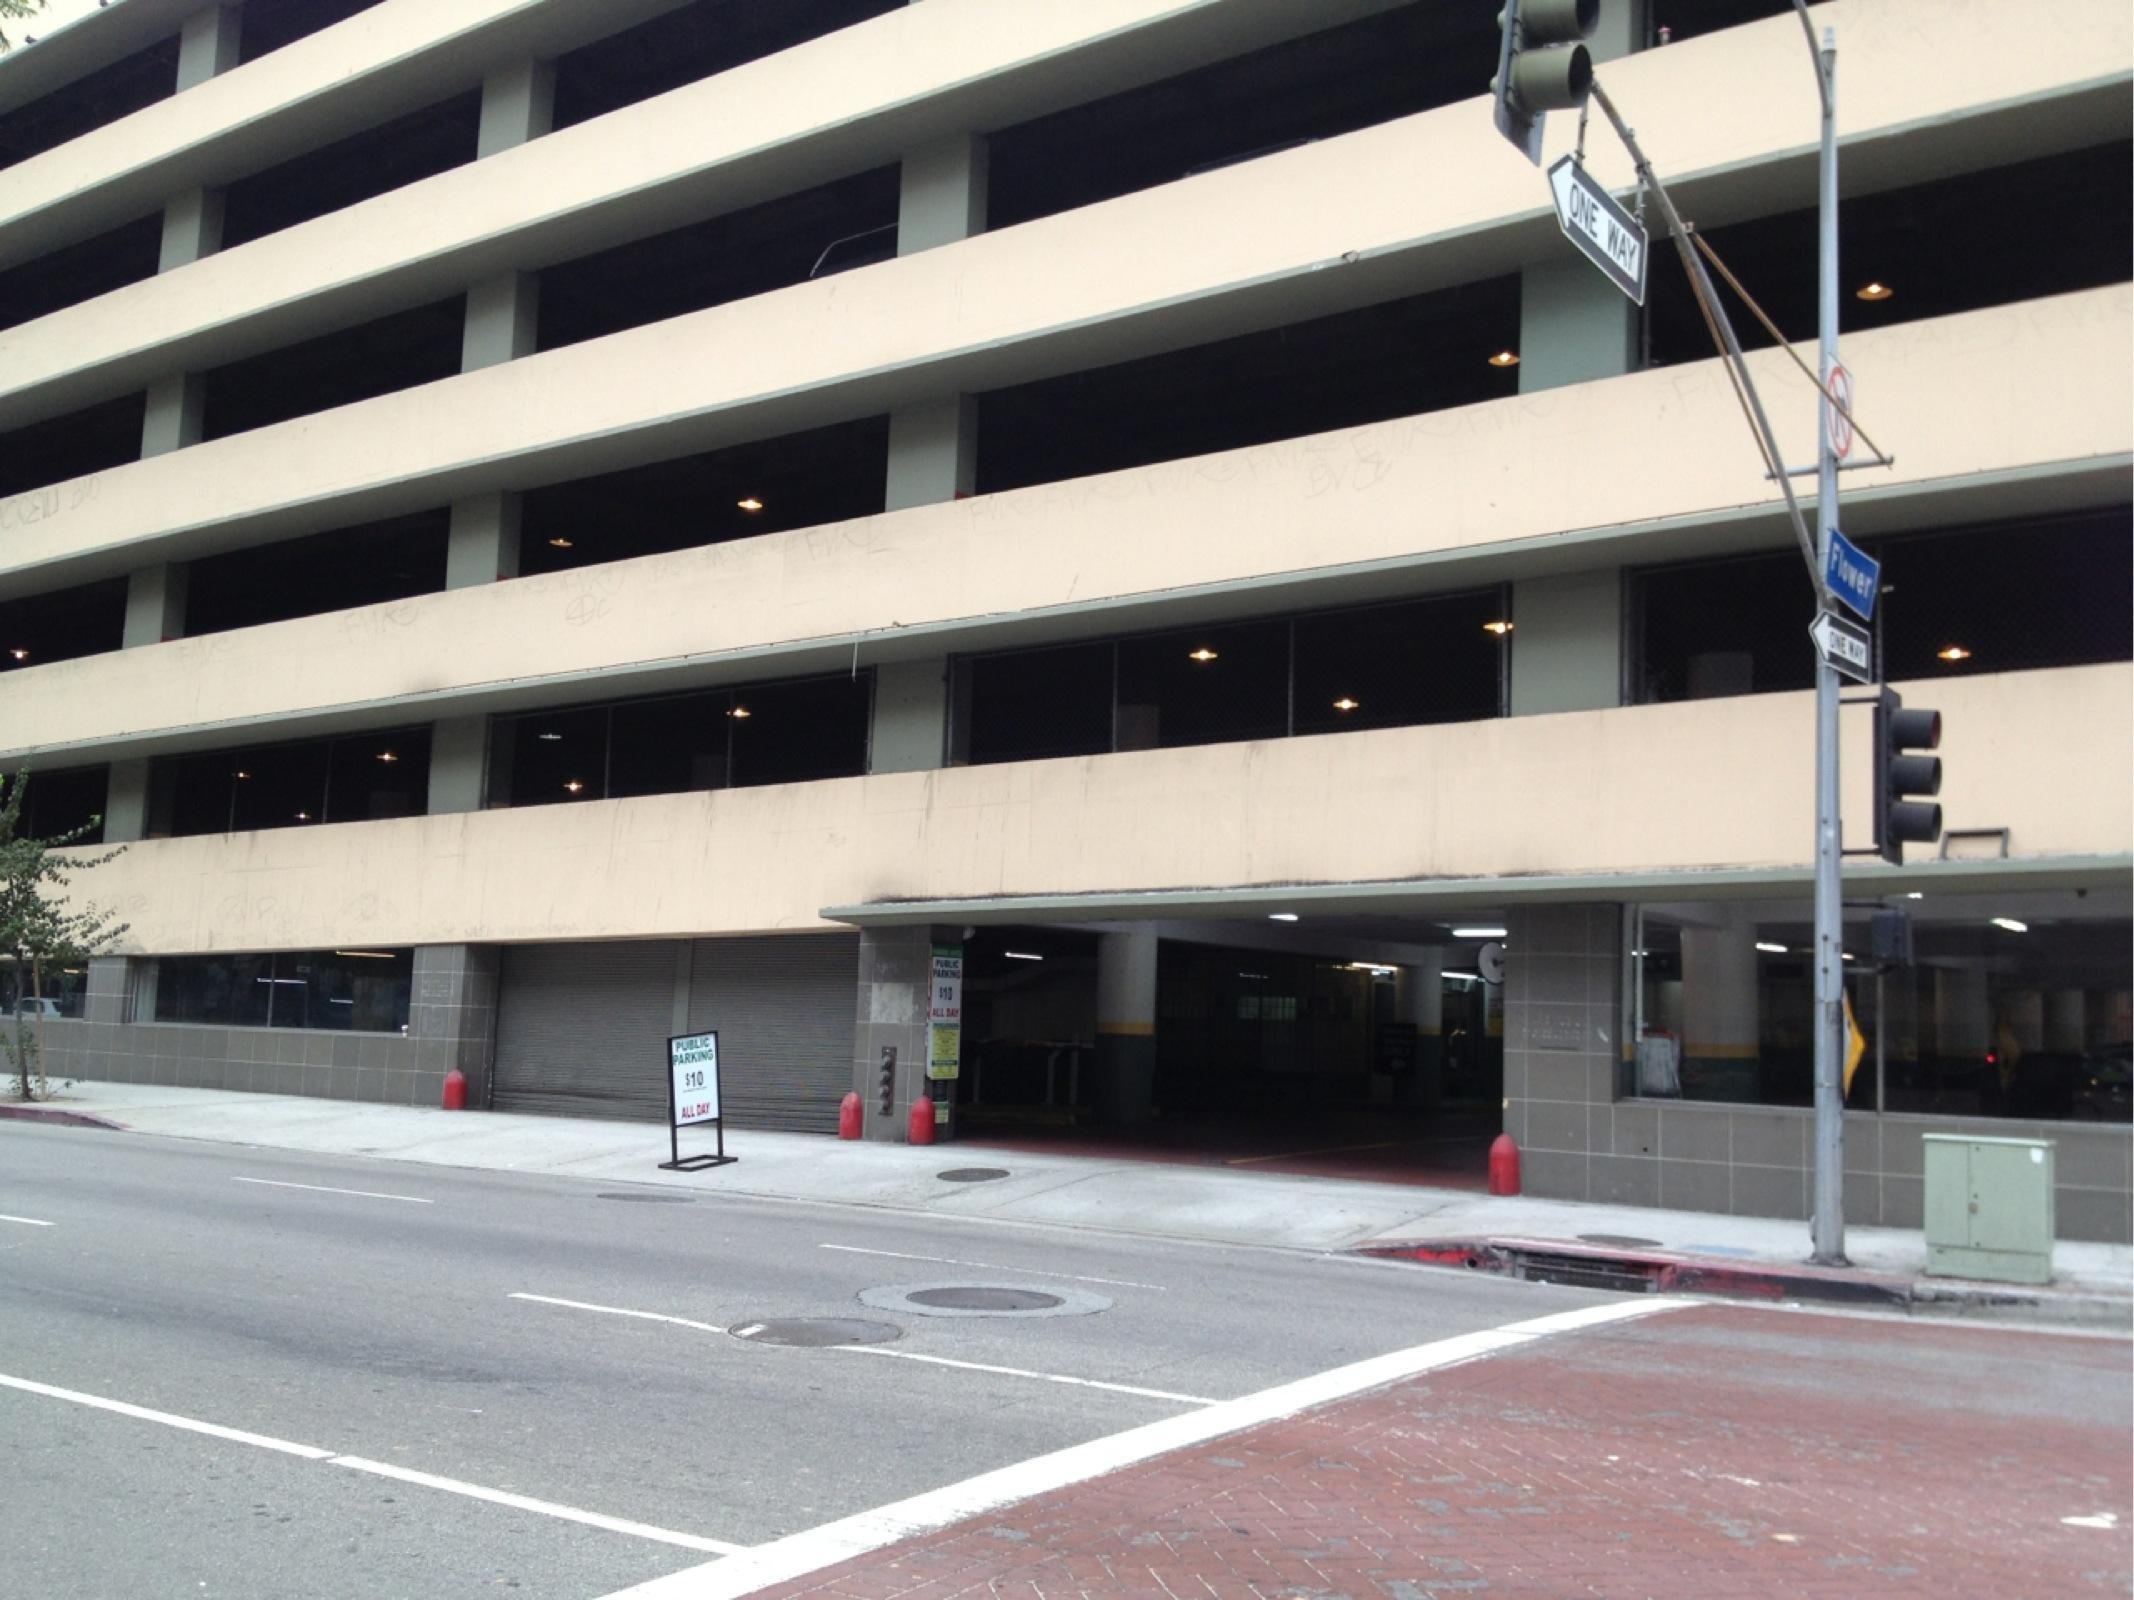  parking on South Flower Street in Los Angeles